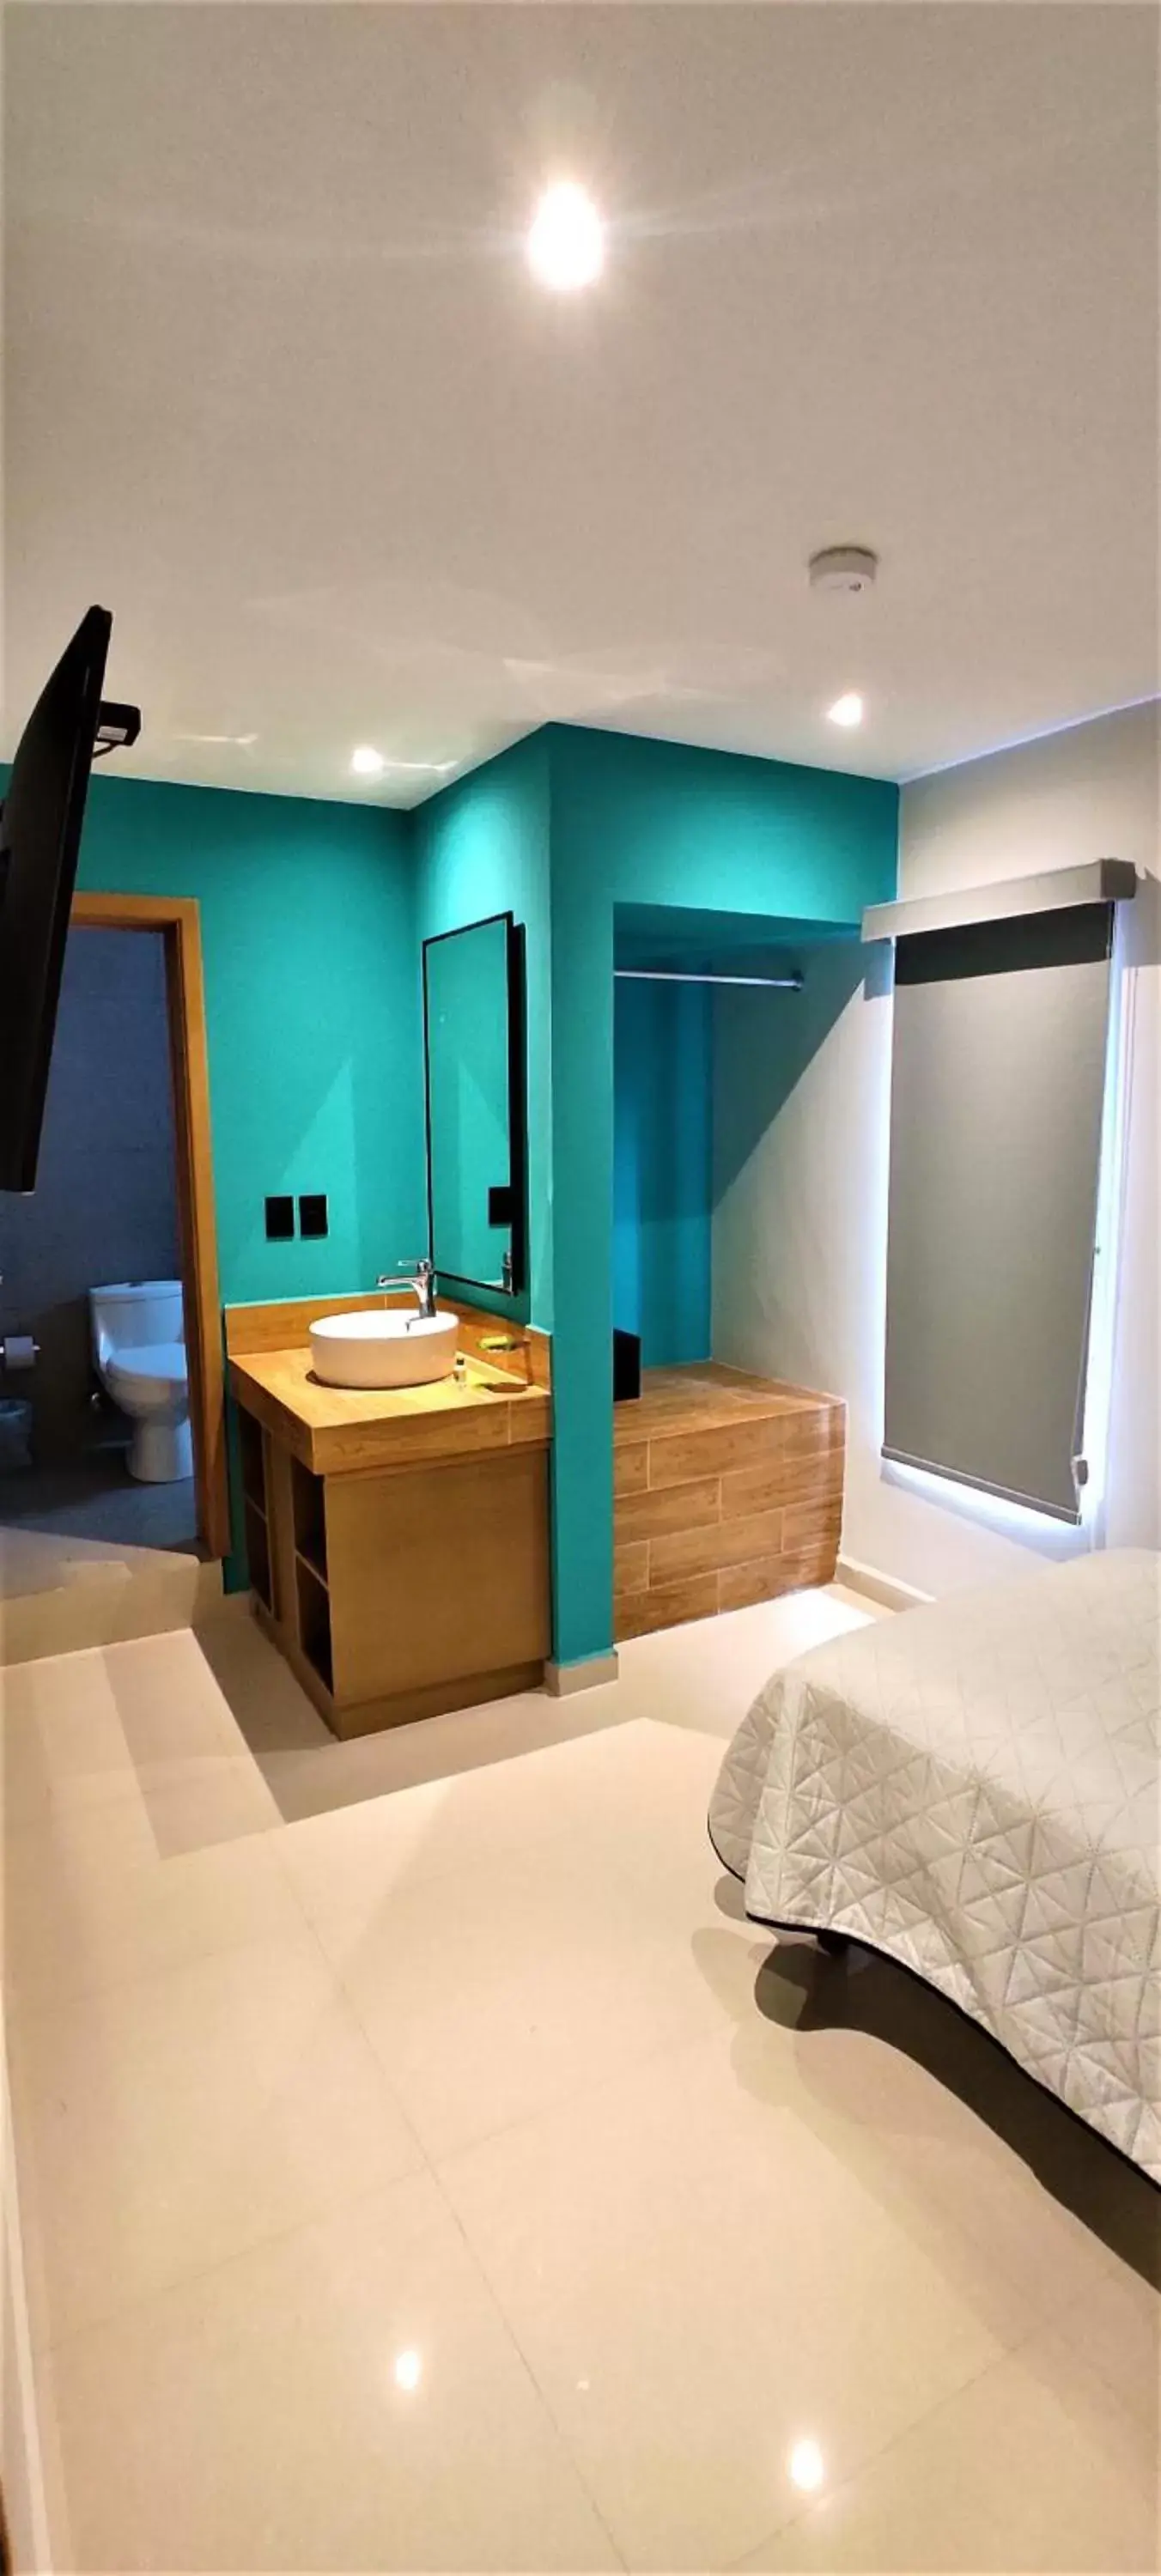 Photo of the whole room, Bathroom in Hotel Kavia Mazatlán